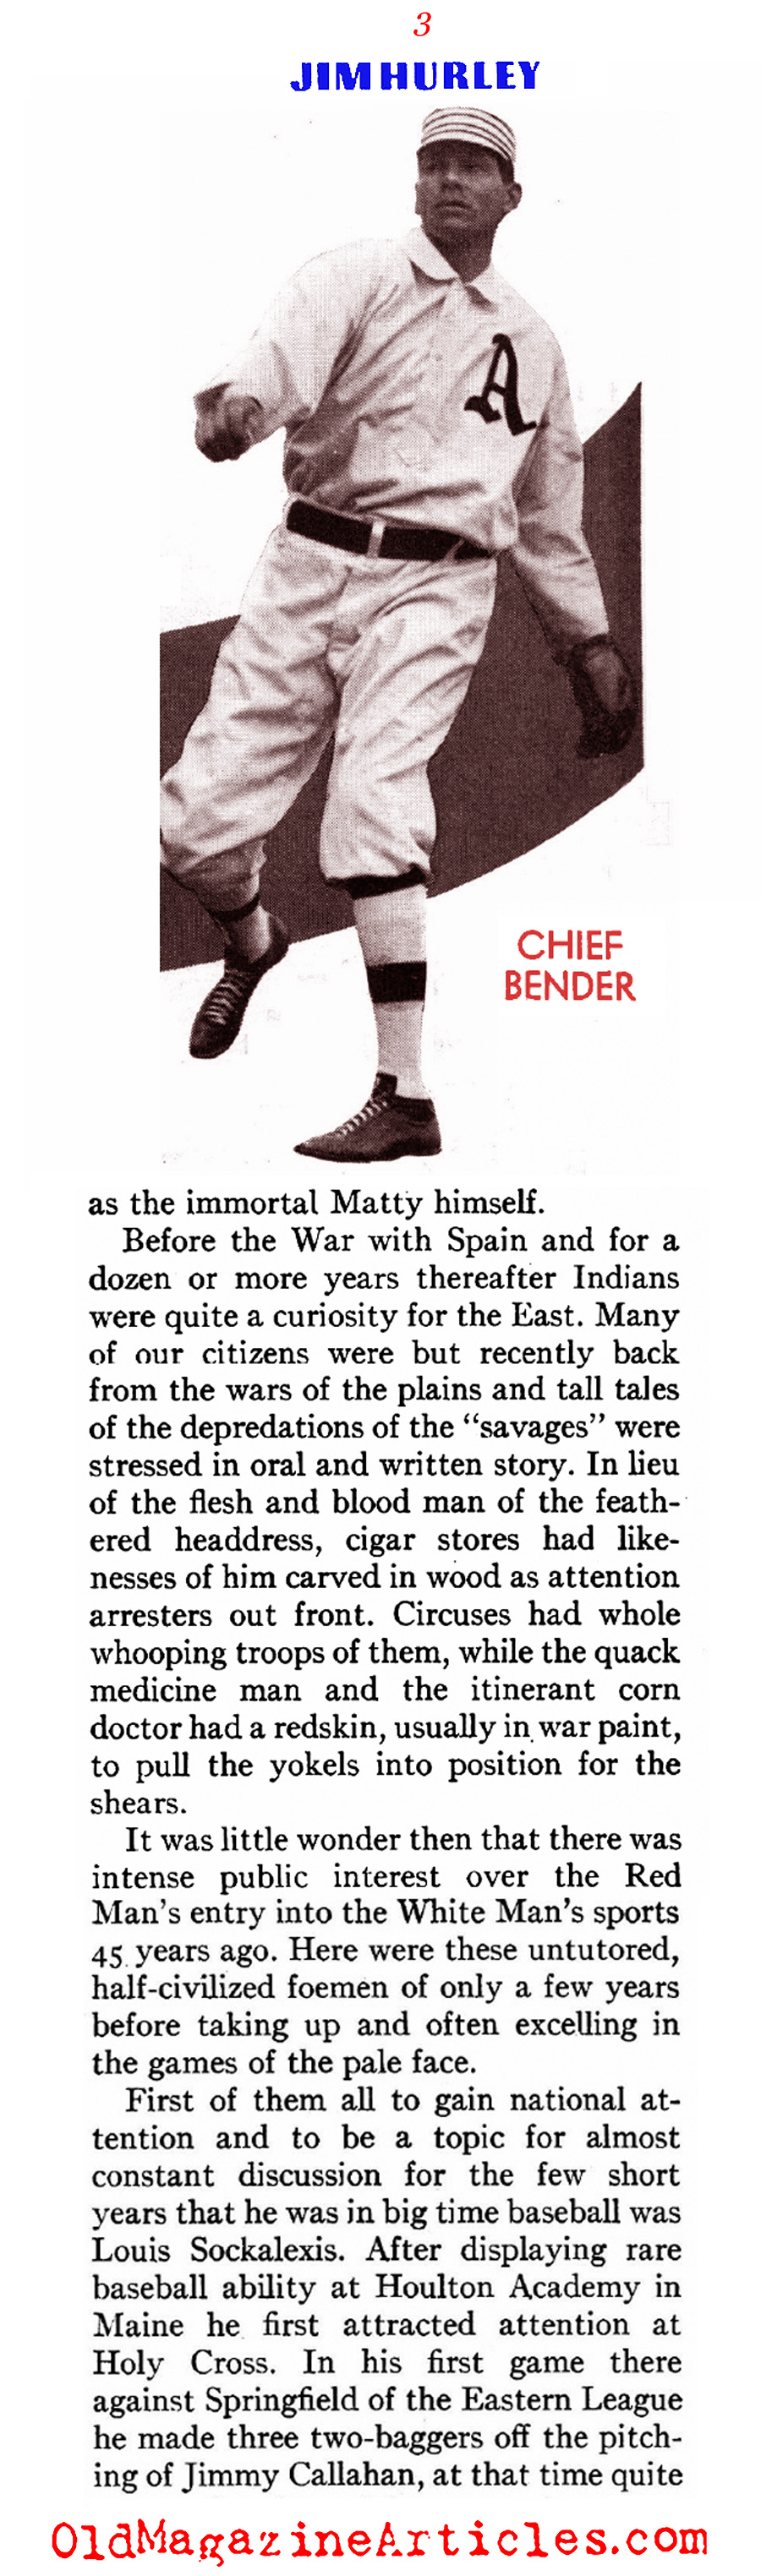 Jim Thorpe and the Carlisle Indians (American Legion Magazine, 1940)